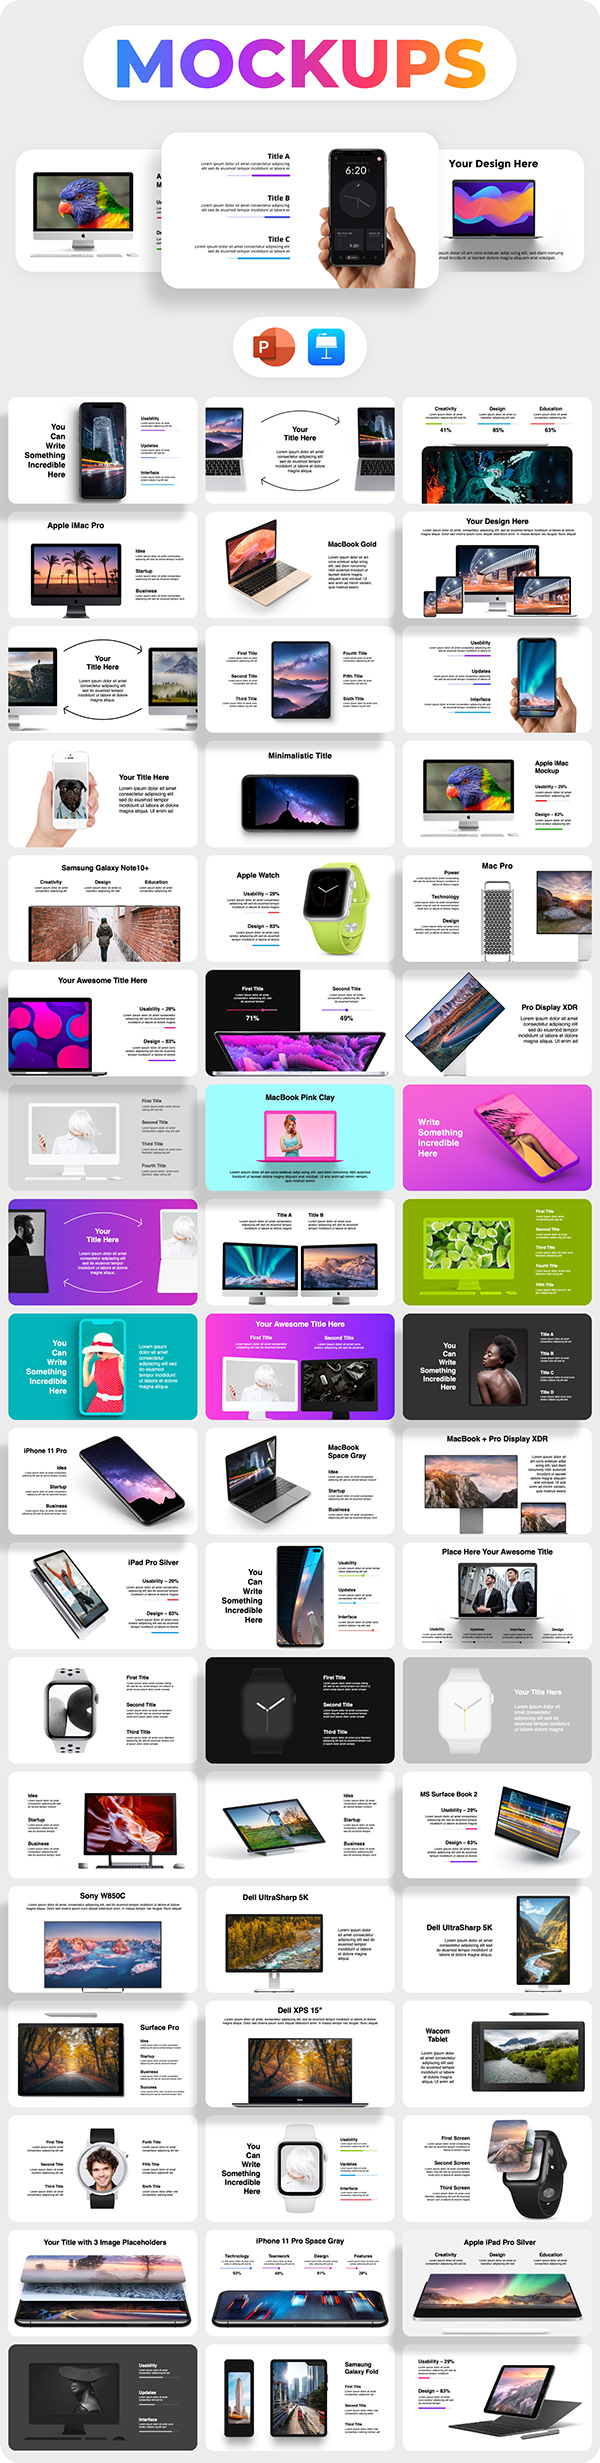 500+ Device Mockups. Free PowerPoint & Keynote Slides!